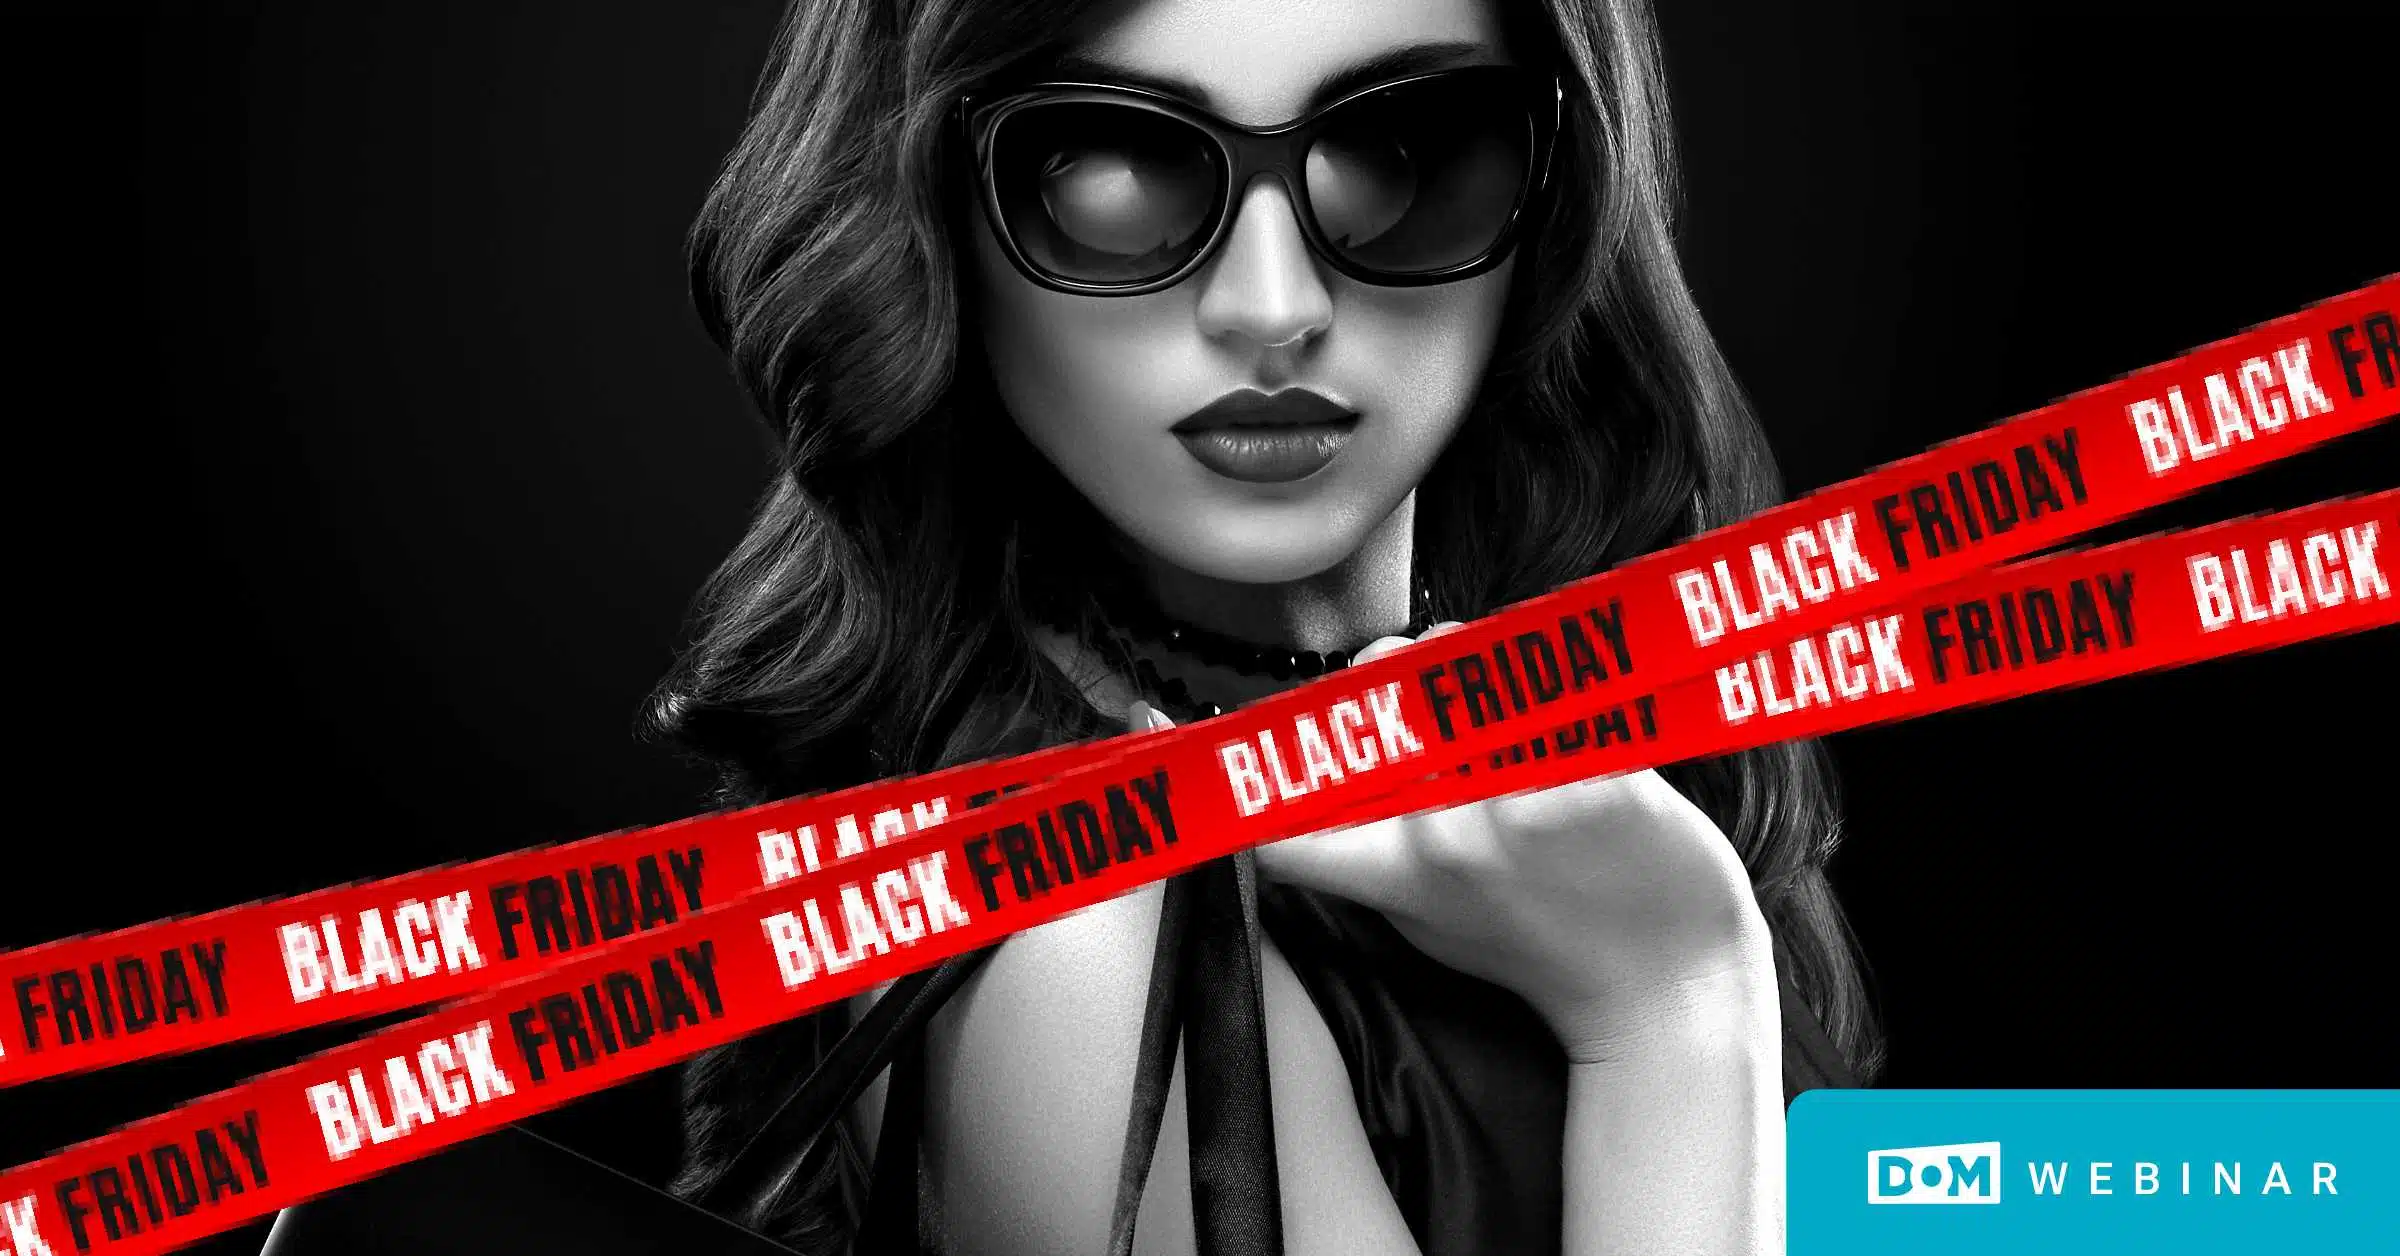 Black Friday Digital Marketing | Black Friday Marketing Graphic